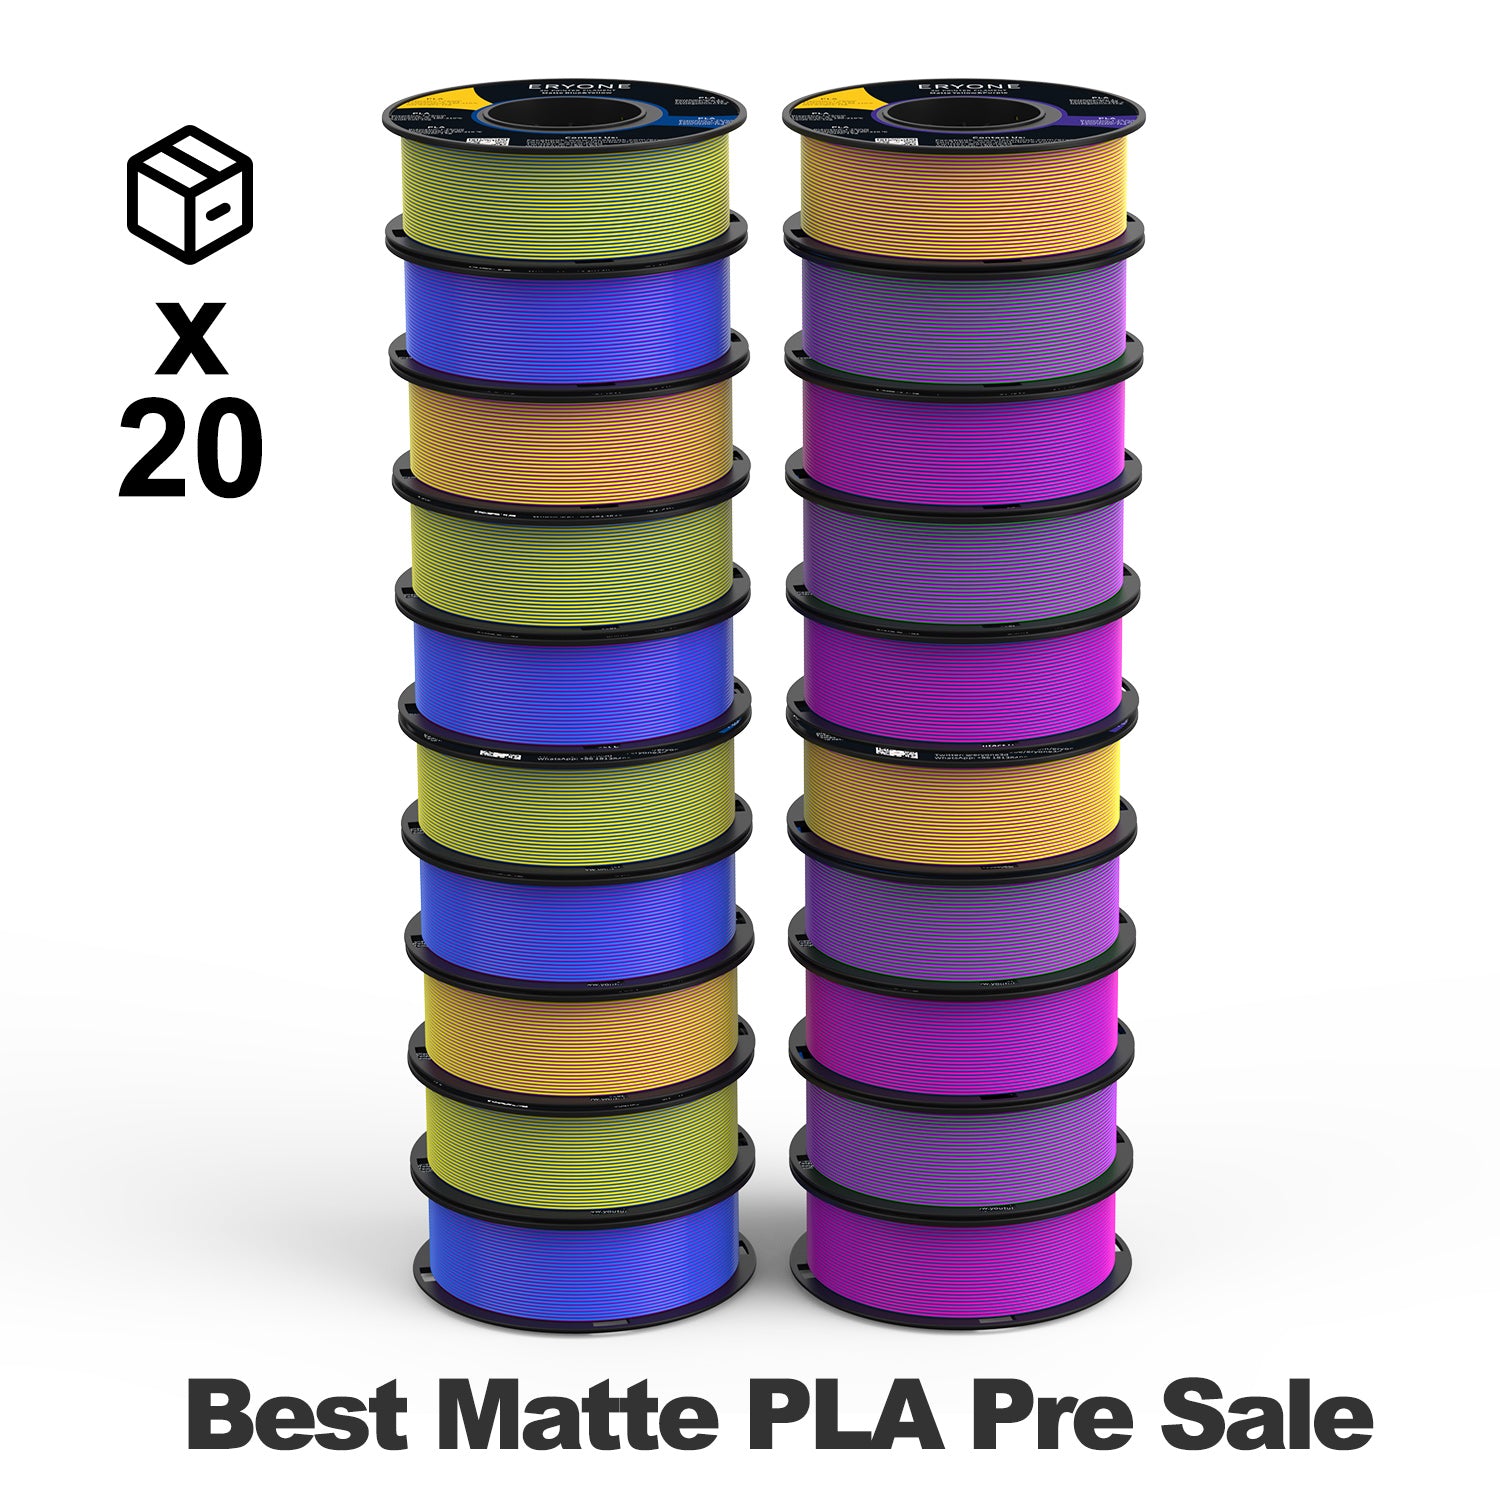 Pre-Sale- ERYON Matte Dual-Color PLA Filament for 3D Printers,1kg +FREE SHIPPING(MOQ:20 rolls,can mix color)